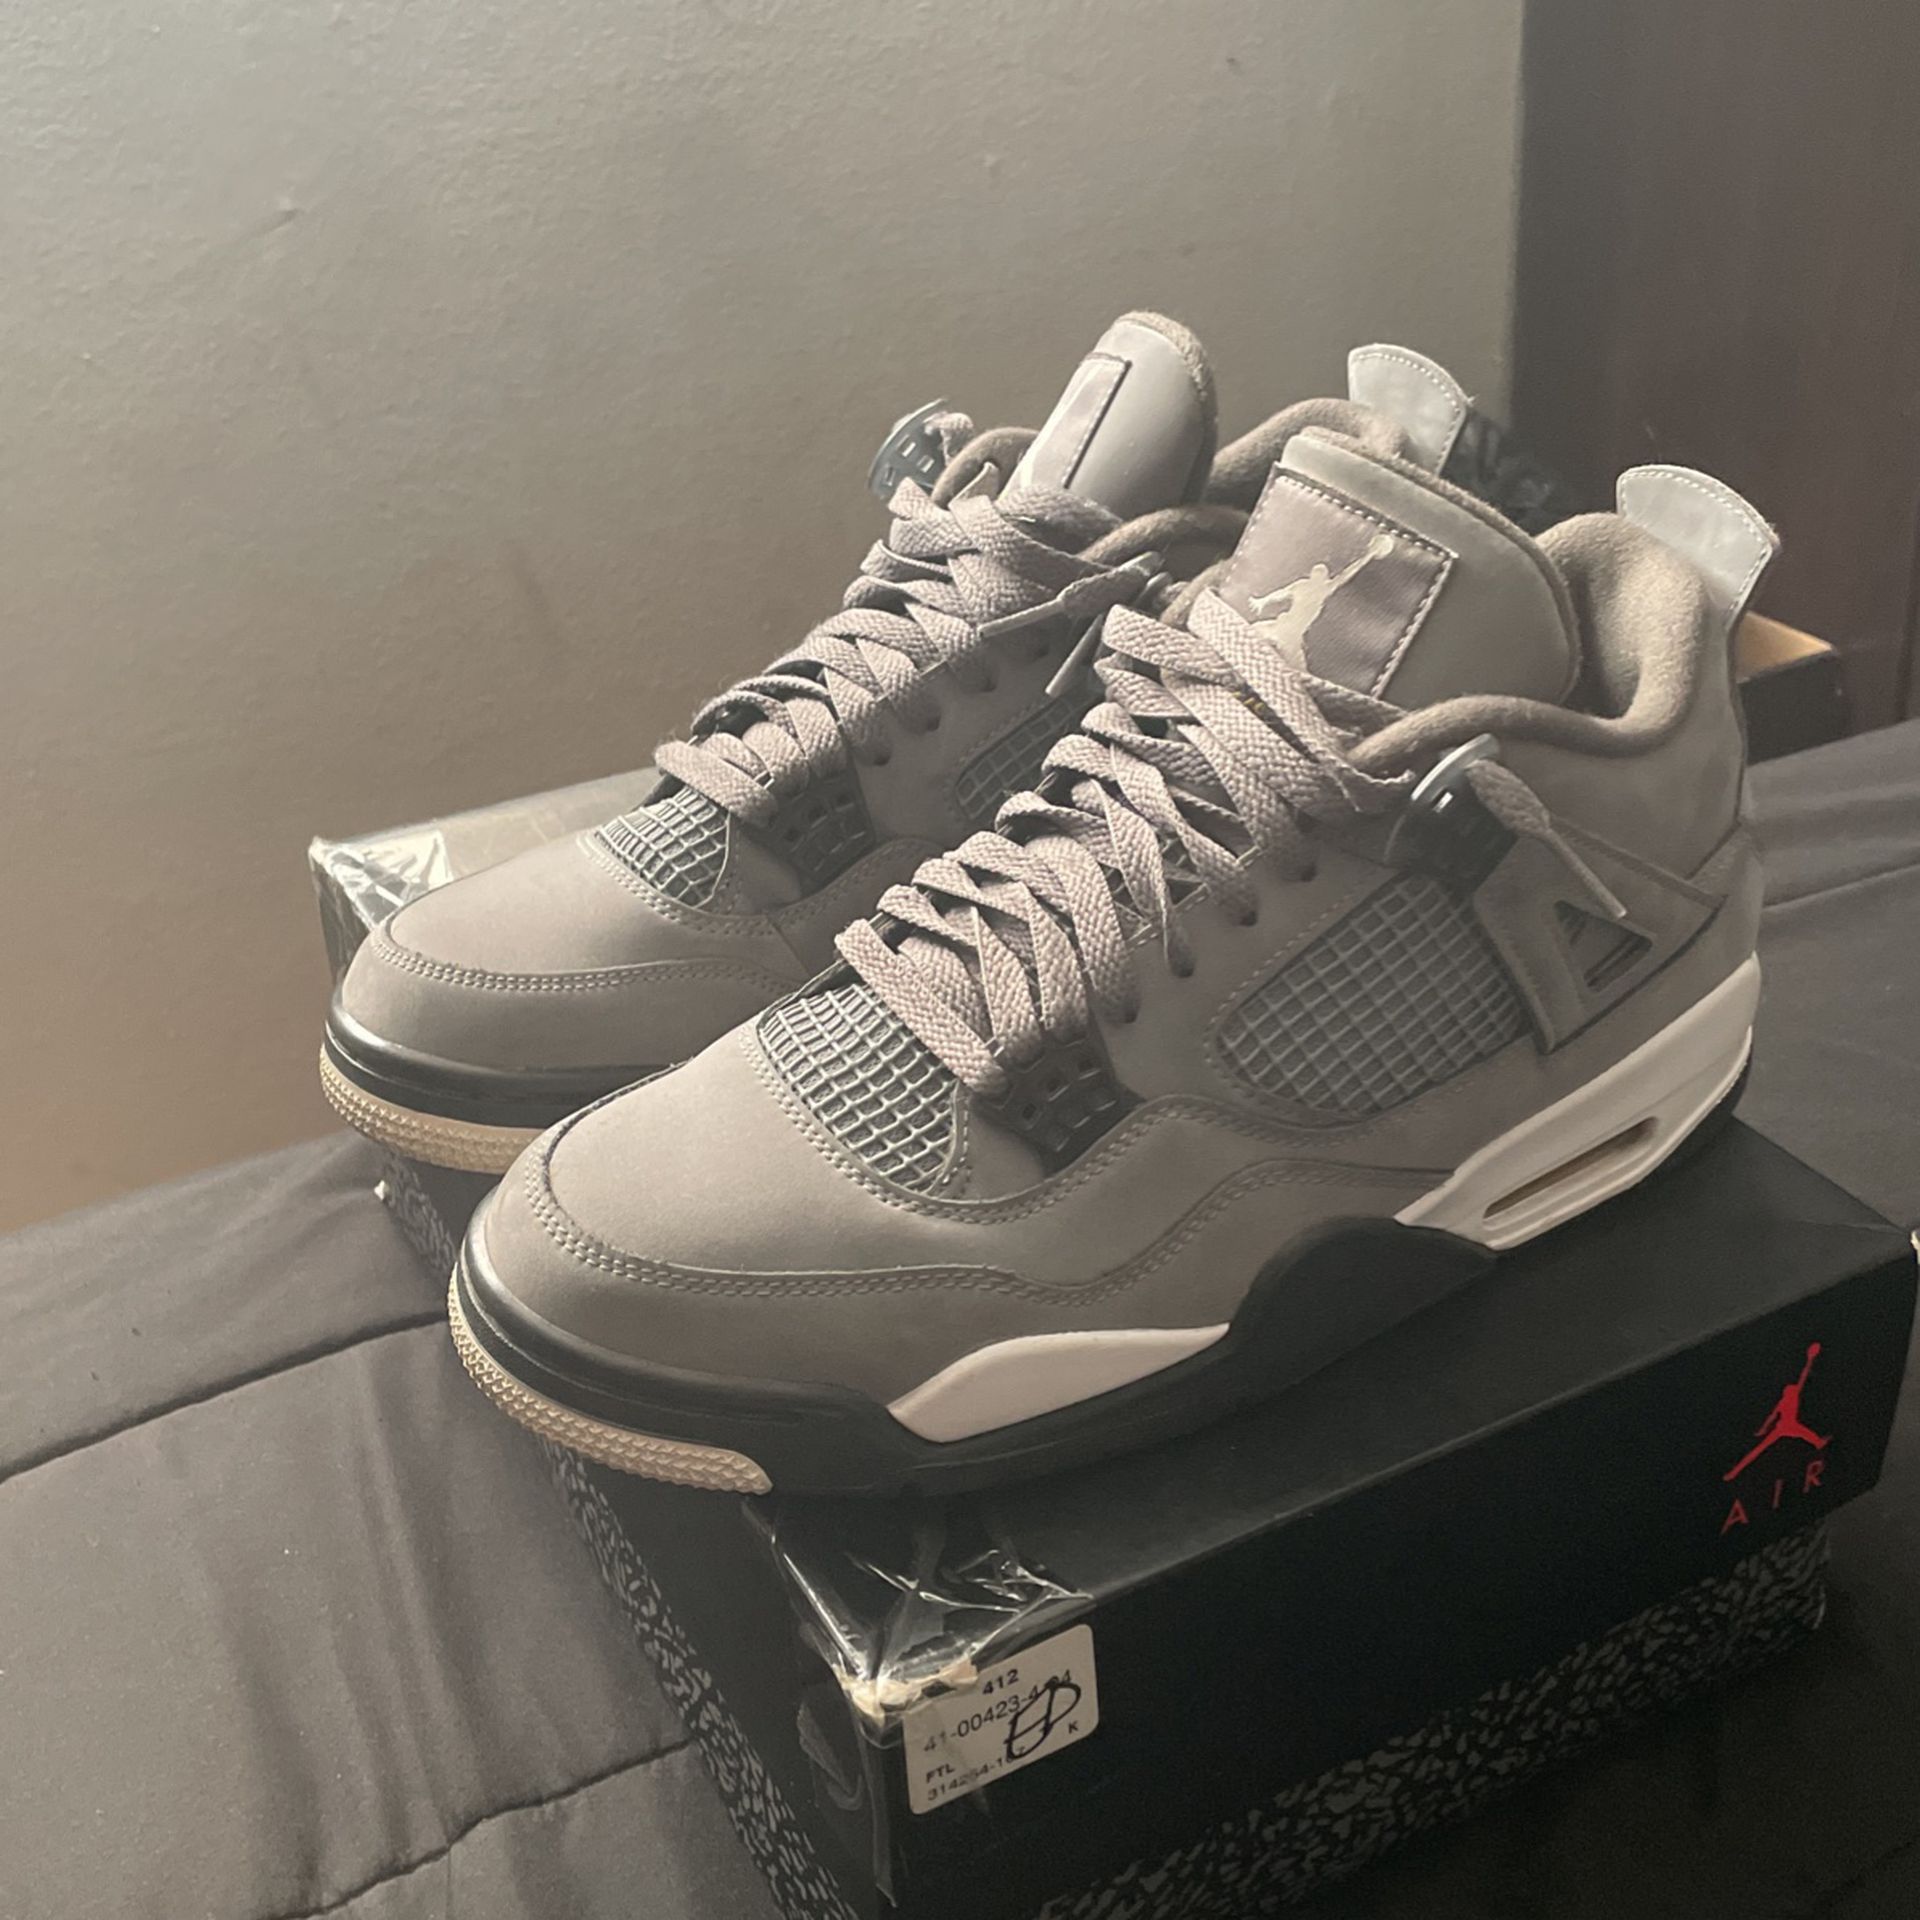 Jordan 4 Cool Grey Size 10